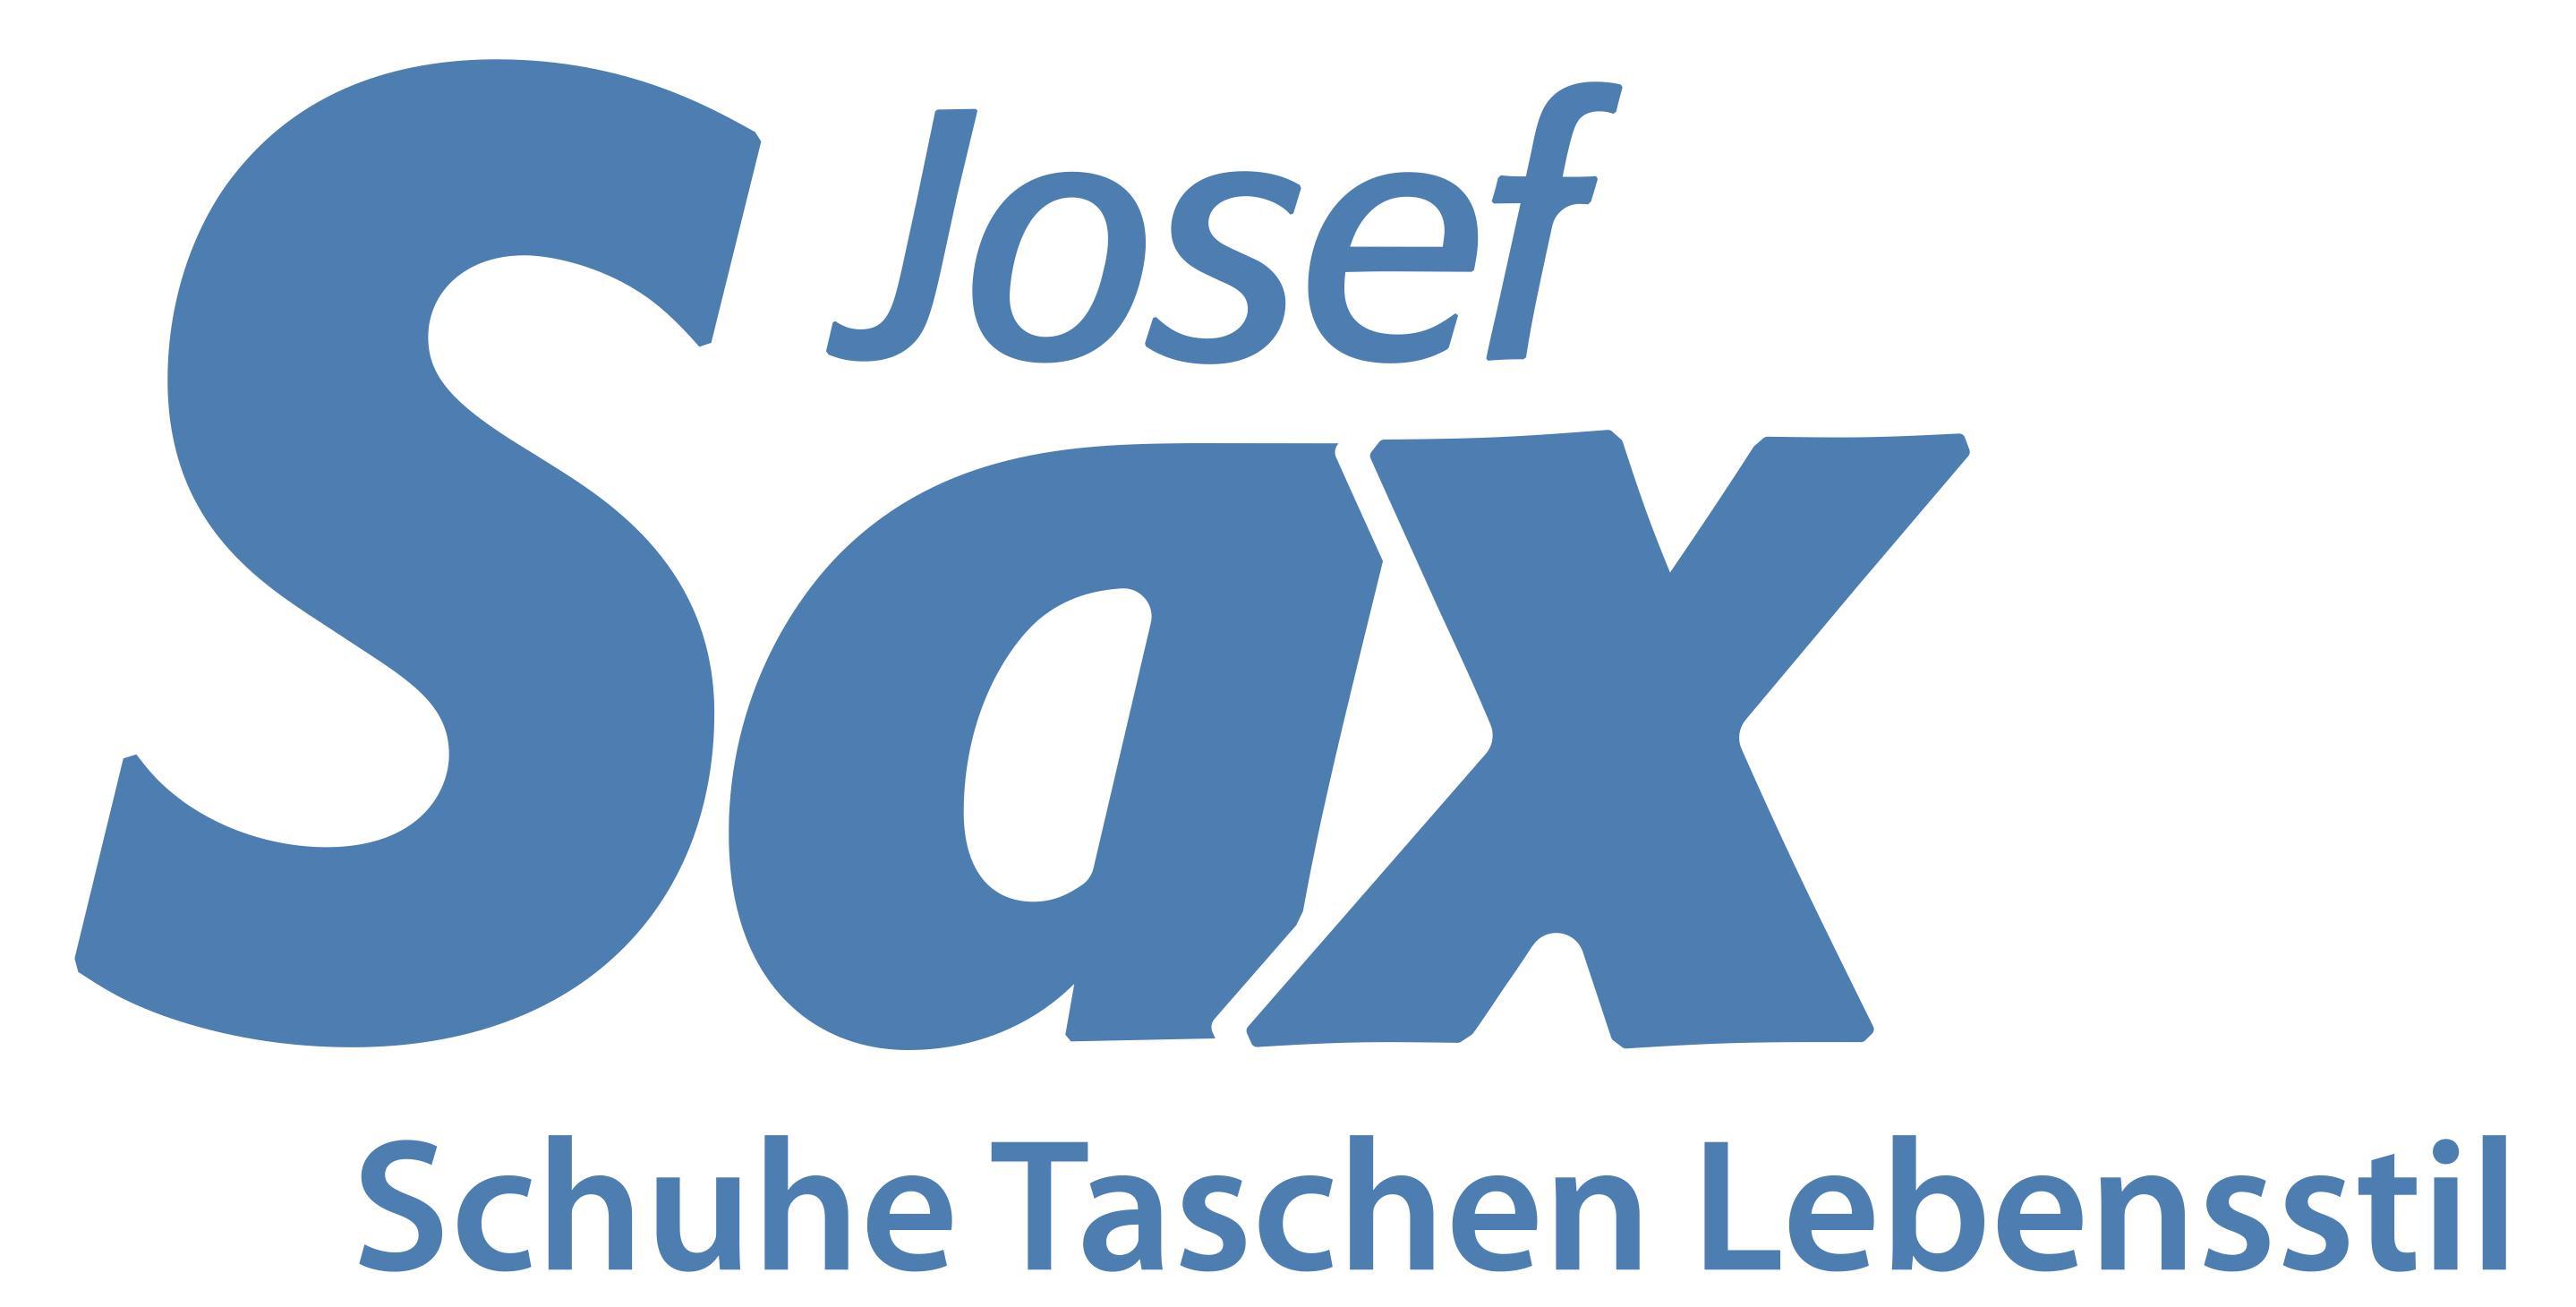 Schuh Josef Sax e.K